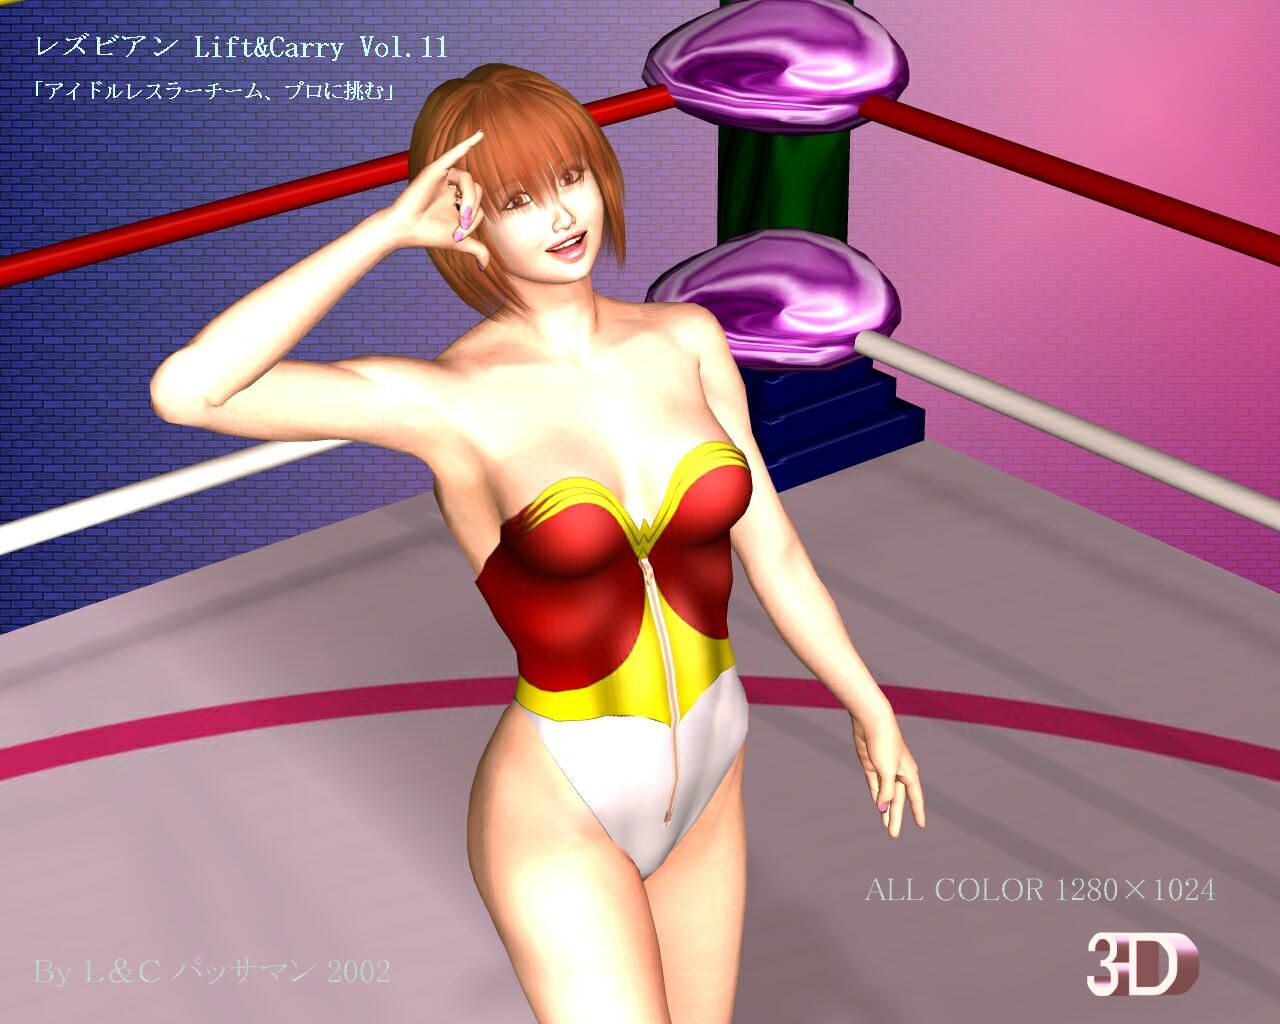 [L&C Passaman] RJ002386 Lesbian Lift&Carry series vol.11 レズビアンLift&Carry Vol.11 「アイドルレスラーチーム、プロに挑む」 1